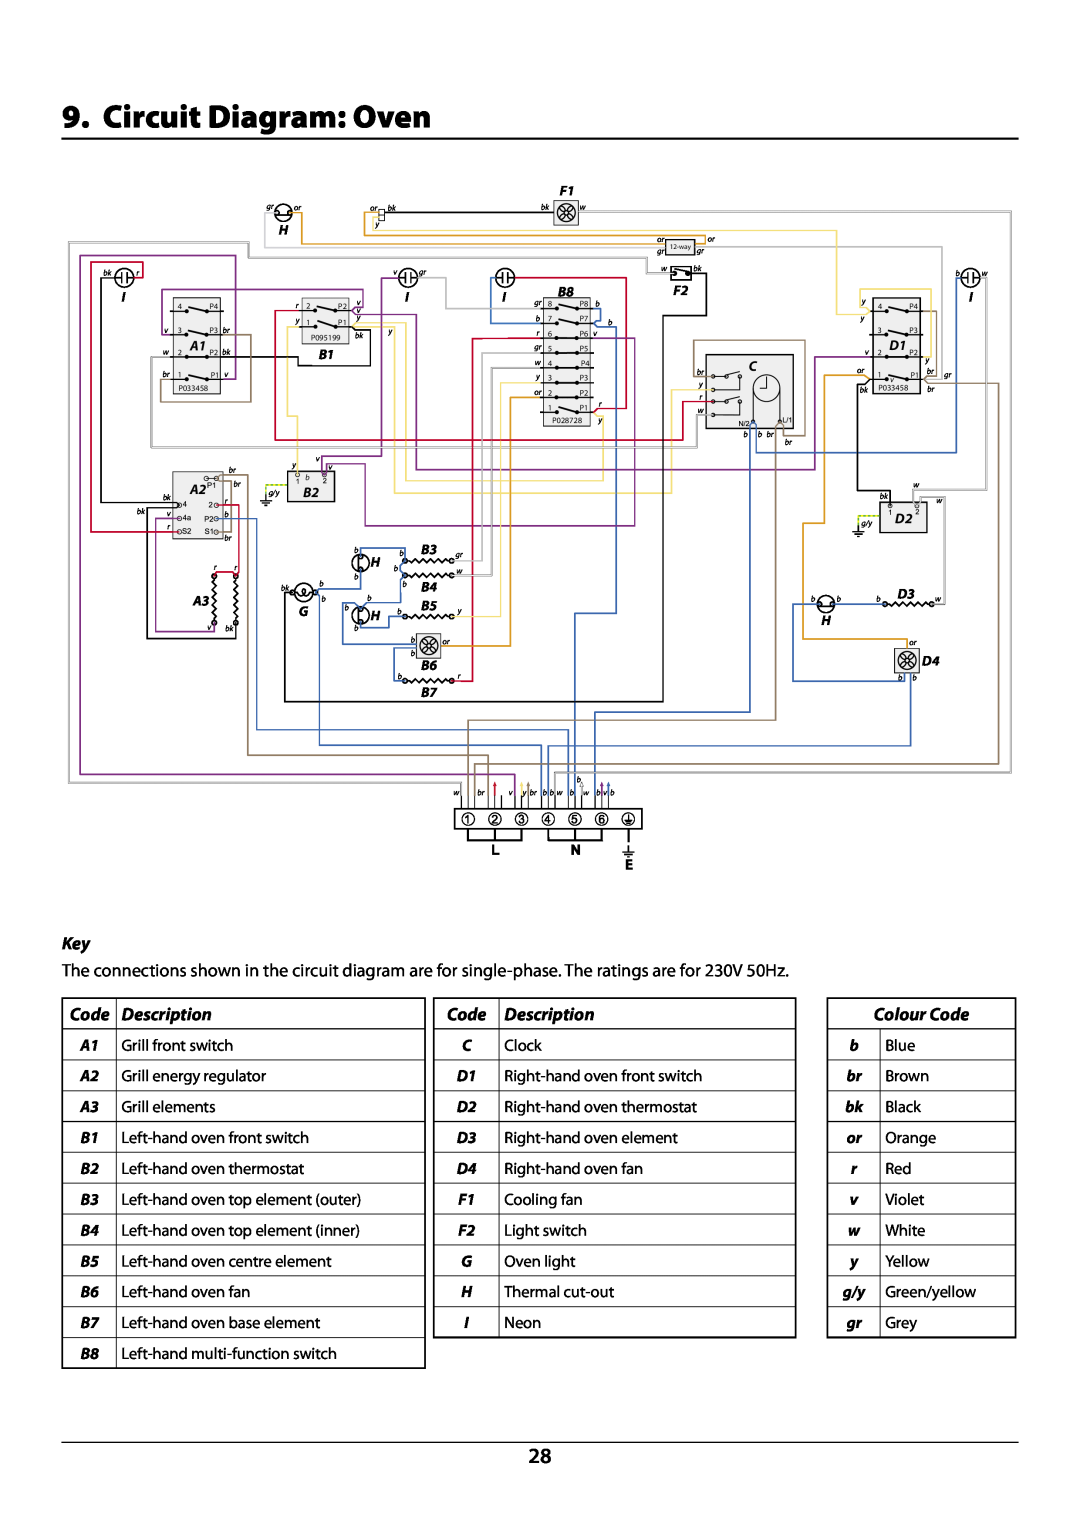 Rangemaster U109987 - 01 manual Circuit Diagram Oven, Description, Colour Code 